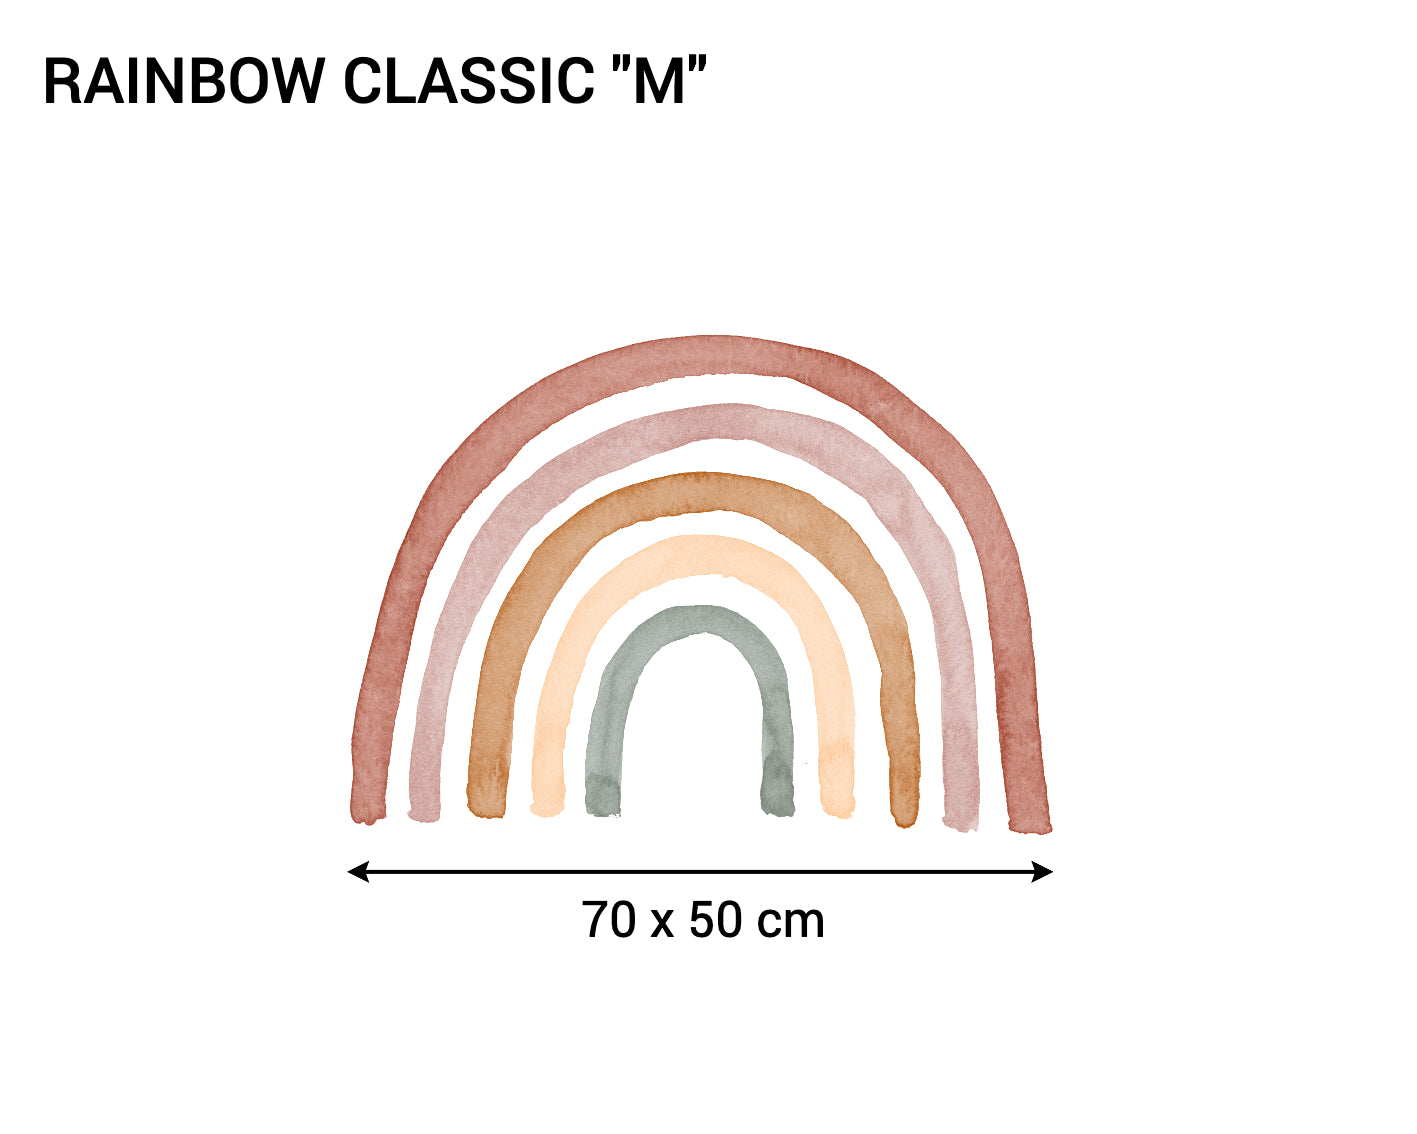 Vinilo Decorativo Infantil RAINBOW Classic M con medidas